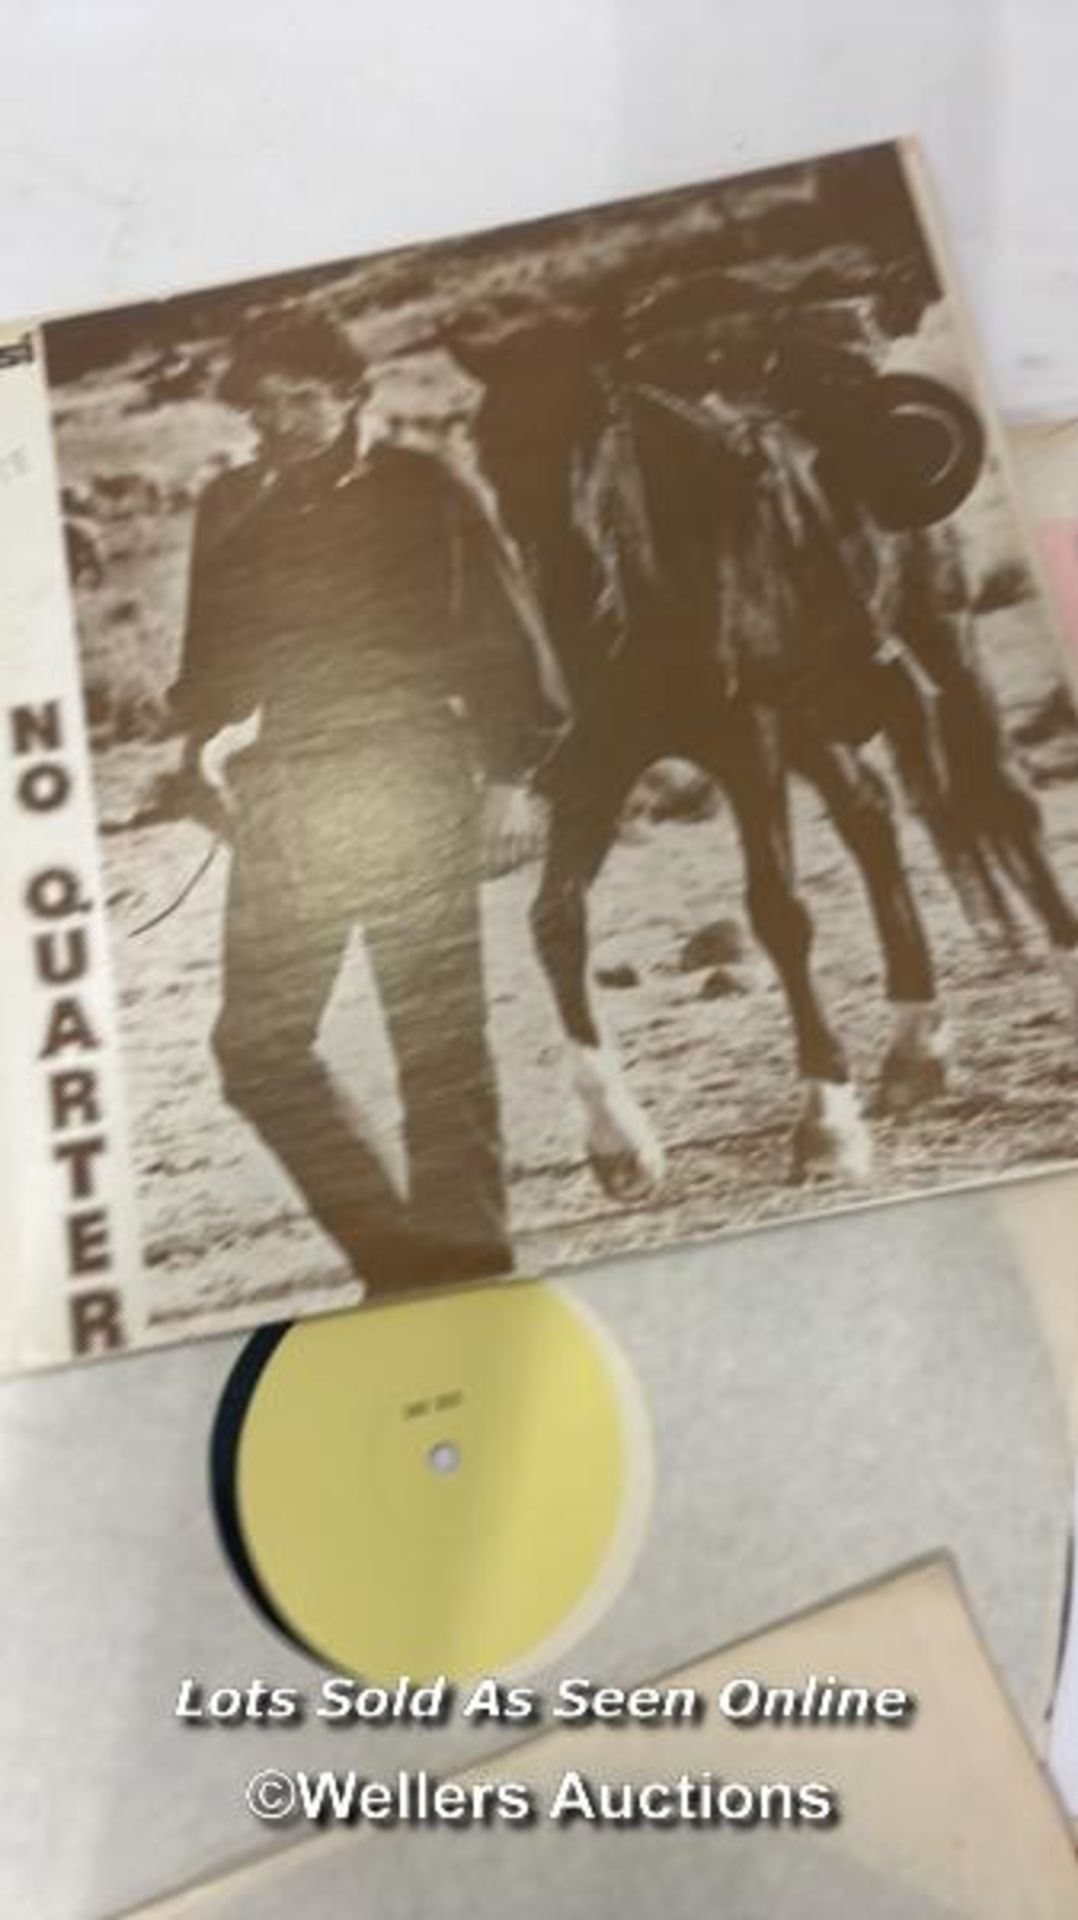 *BOB DYLAN NO QUARTER 1979 LIVE ALBUM, RARE UNOFFICIAL IMPORT, TMOQ VINYL RECORD & OTHERS - Image 2 of 5